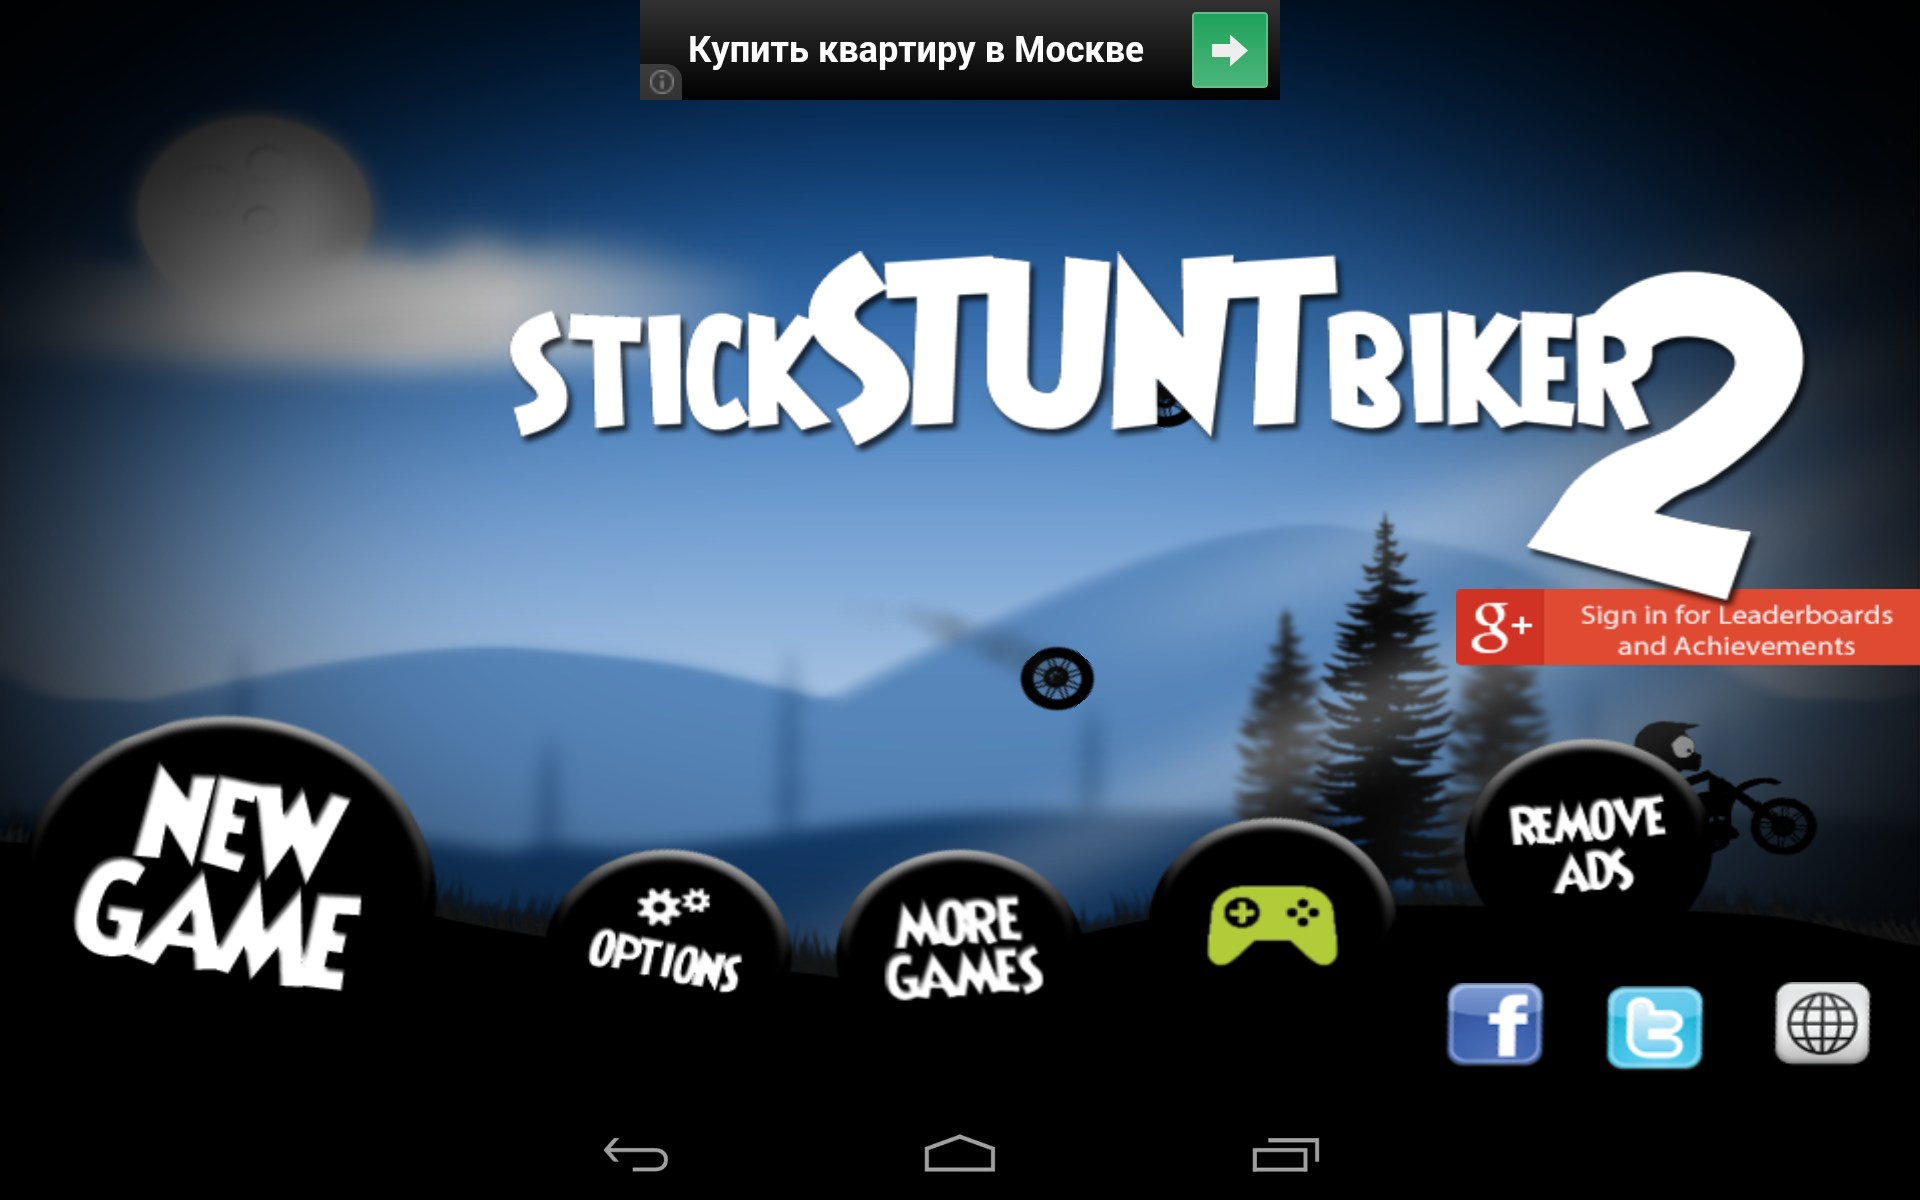 Stick Stunt Biker 2 Game Android Free Download